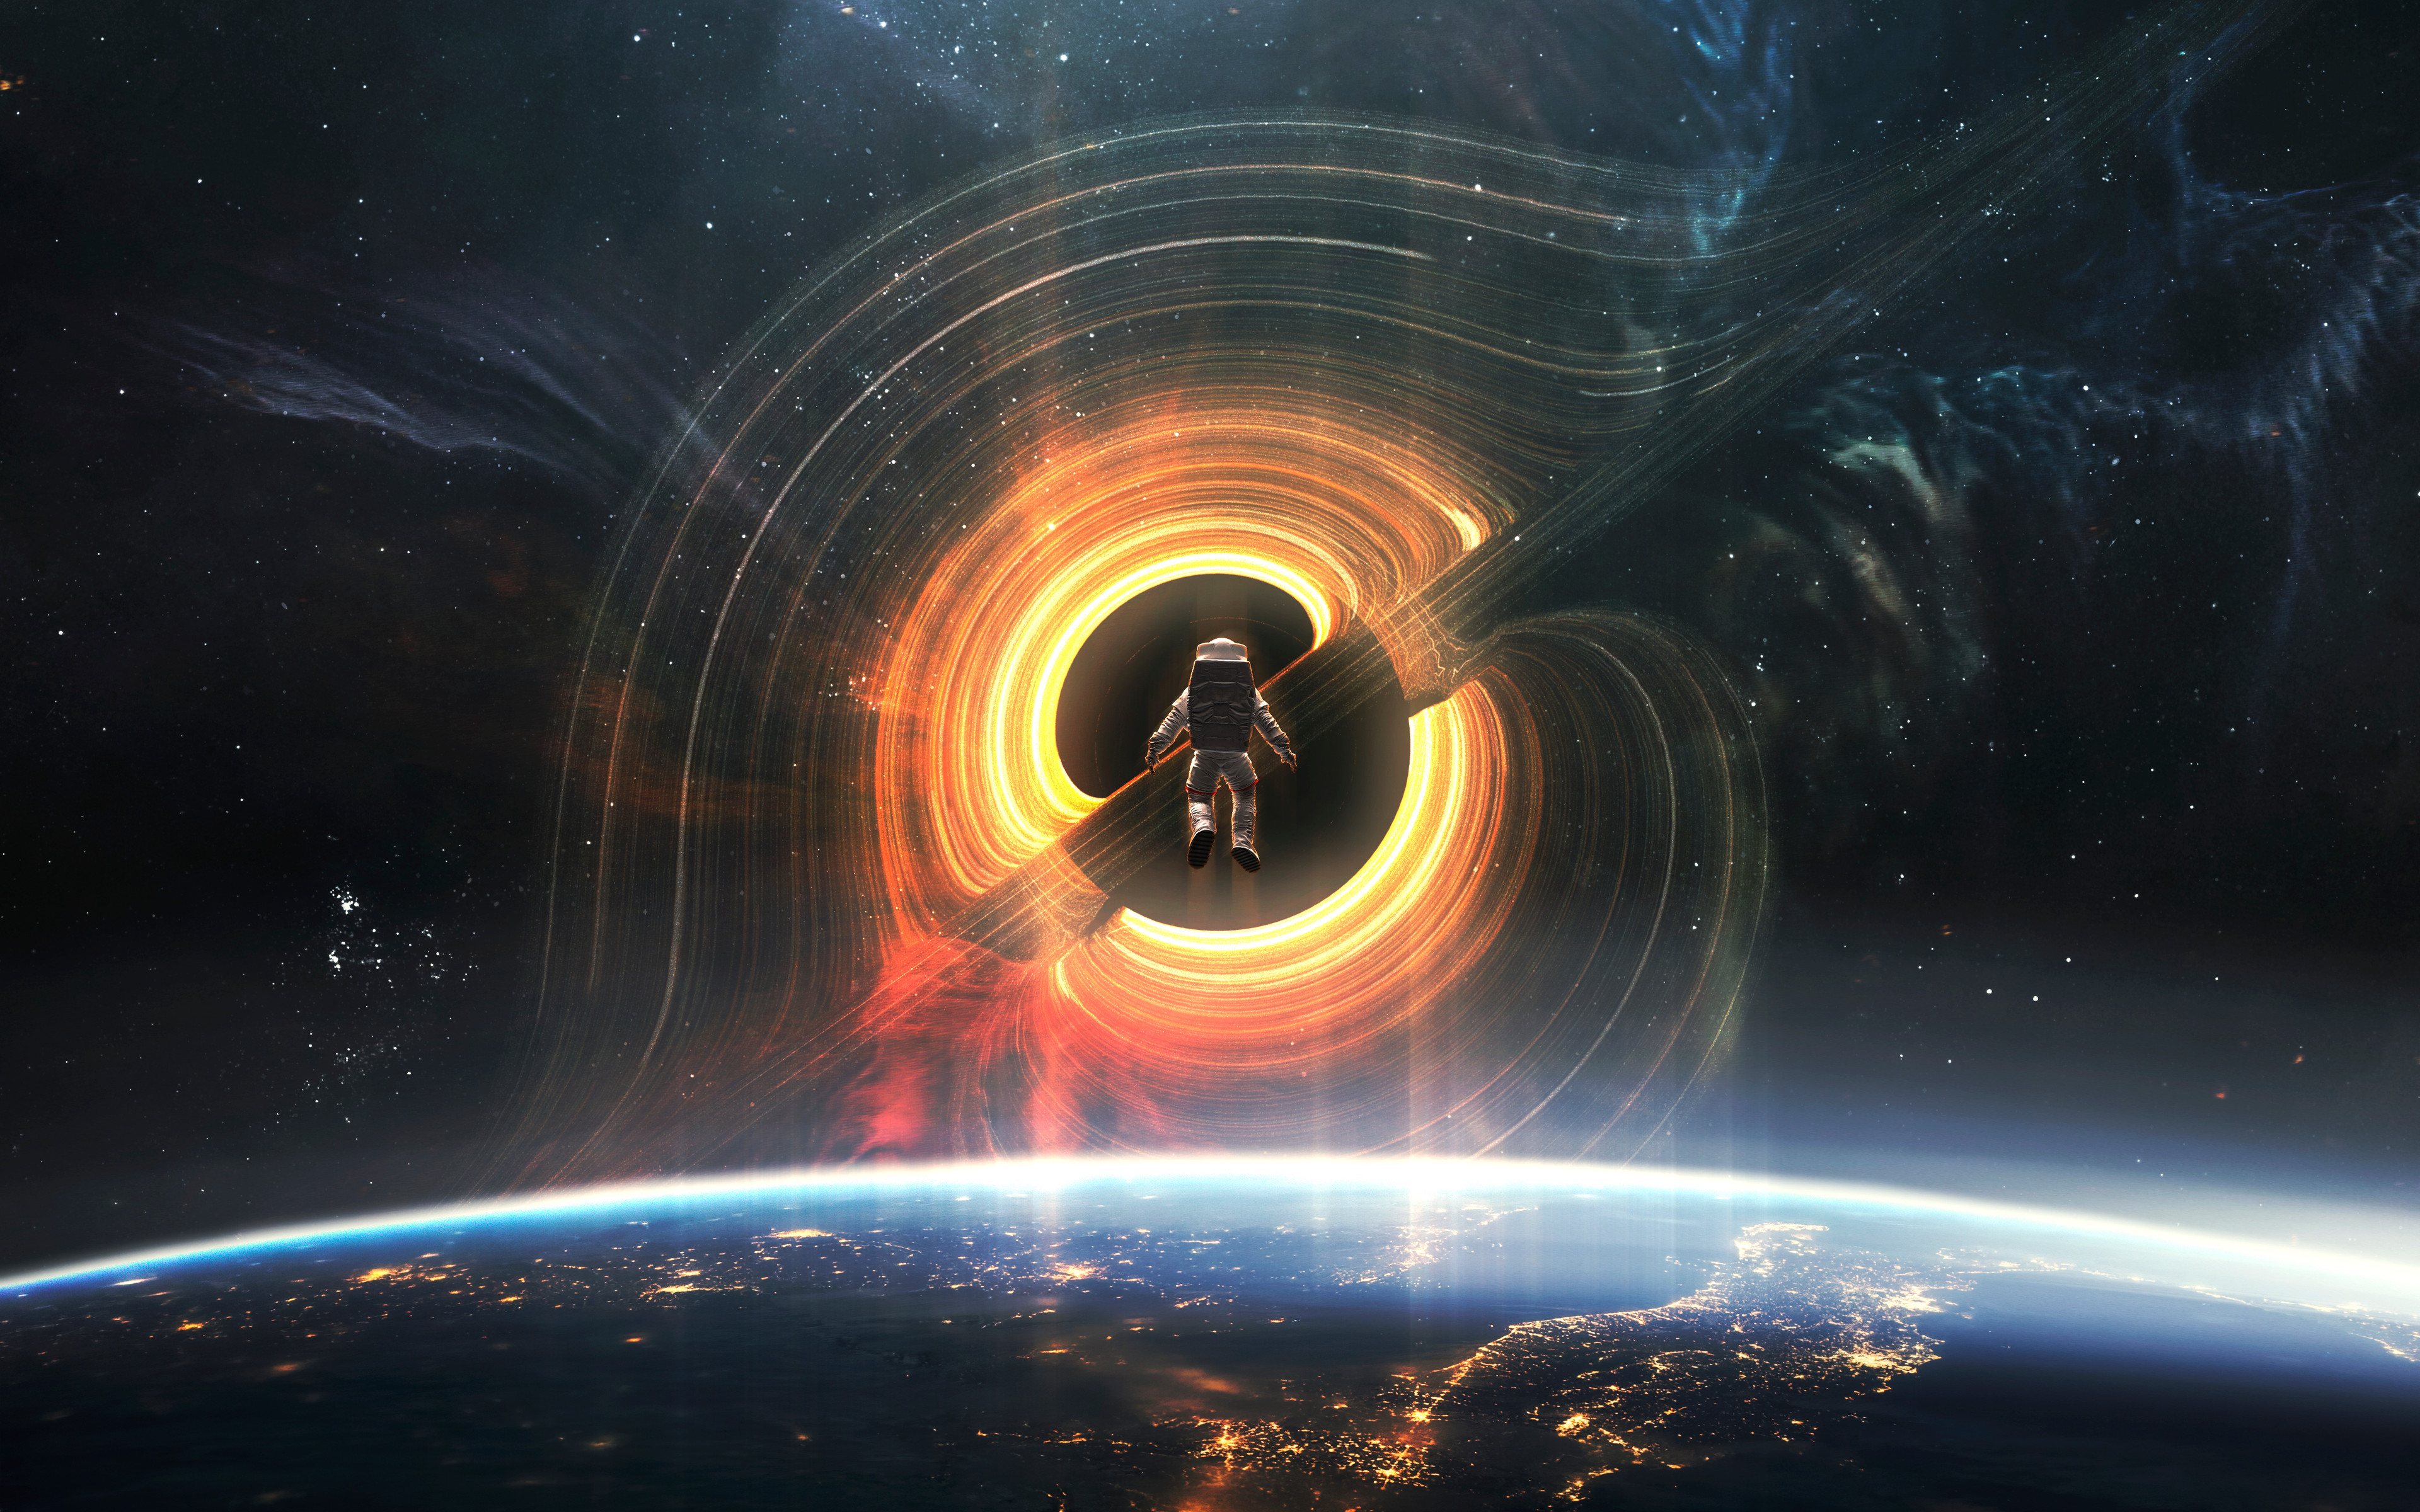 Digital Digital Art Artwork Illustration Render Space Art Galaxy Planet Astronaut Black Holes Earth 3840x2400